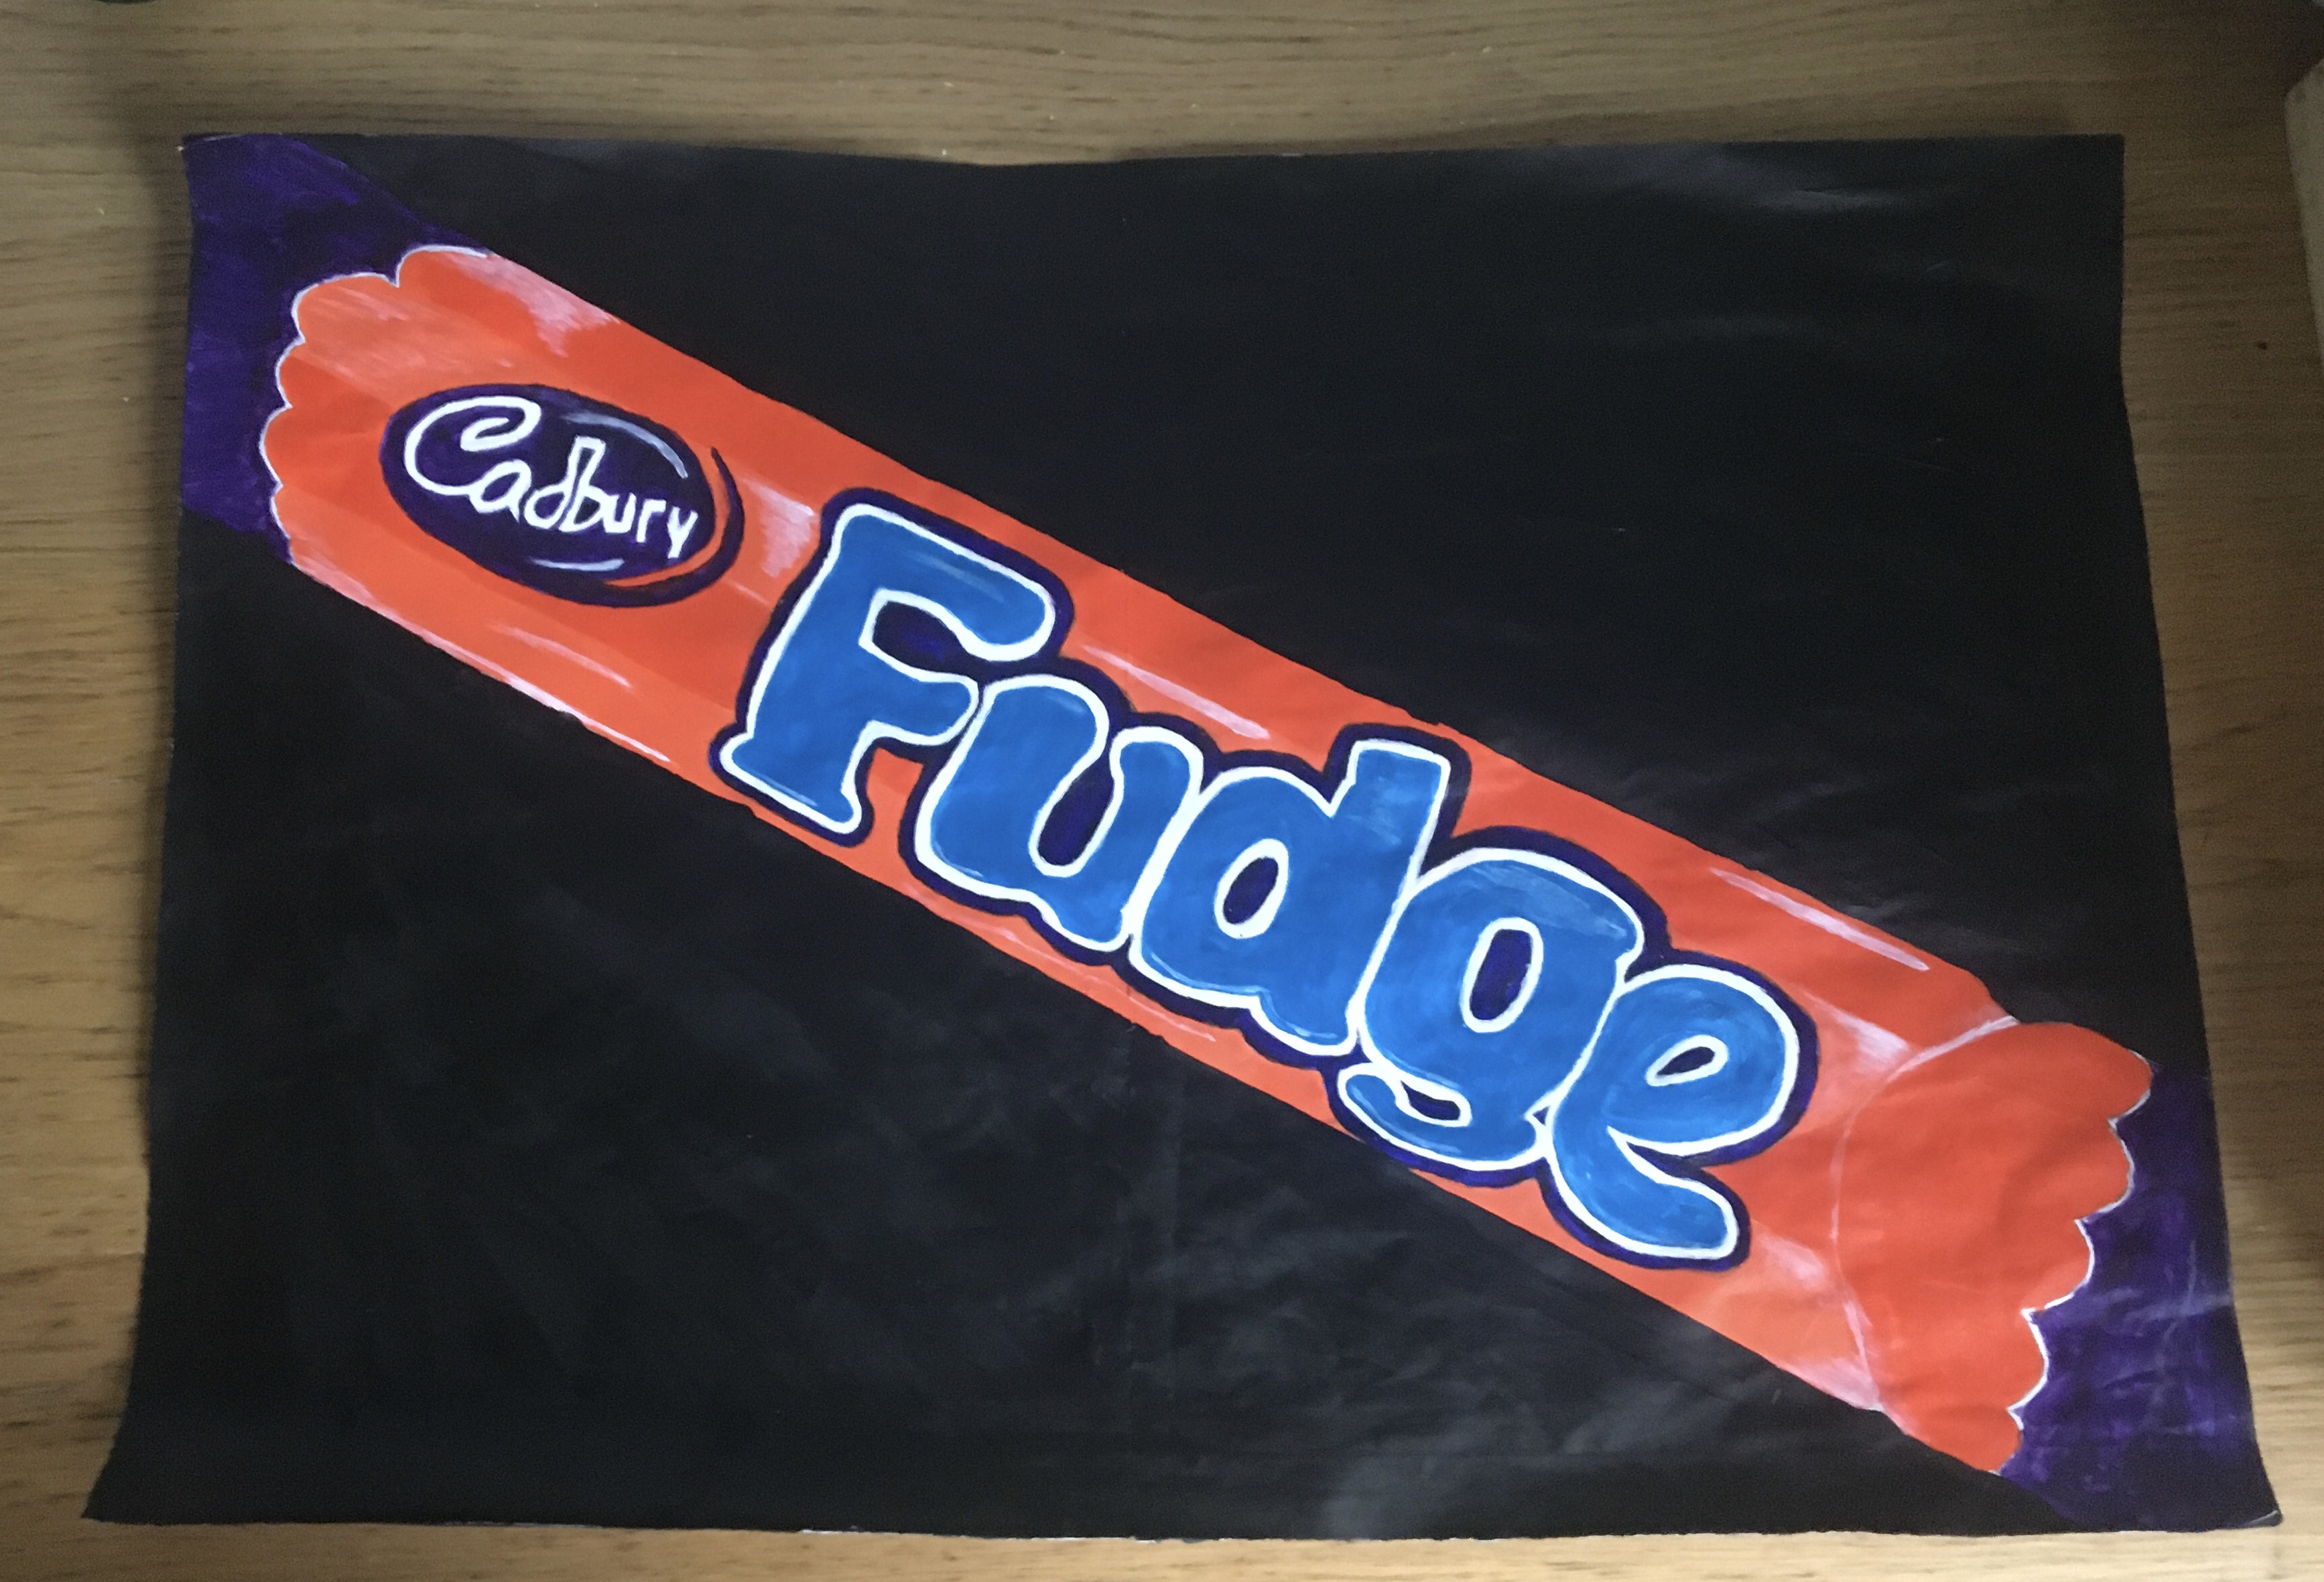 Cadbury fudge bar